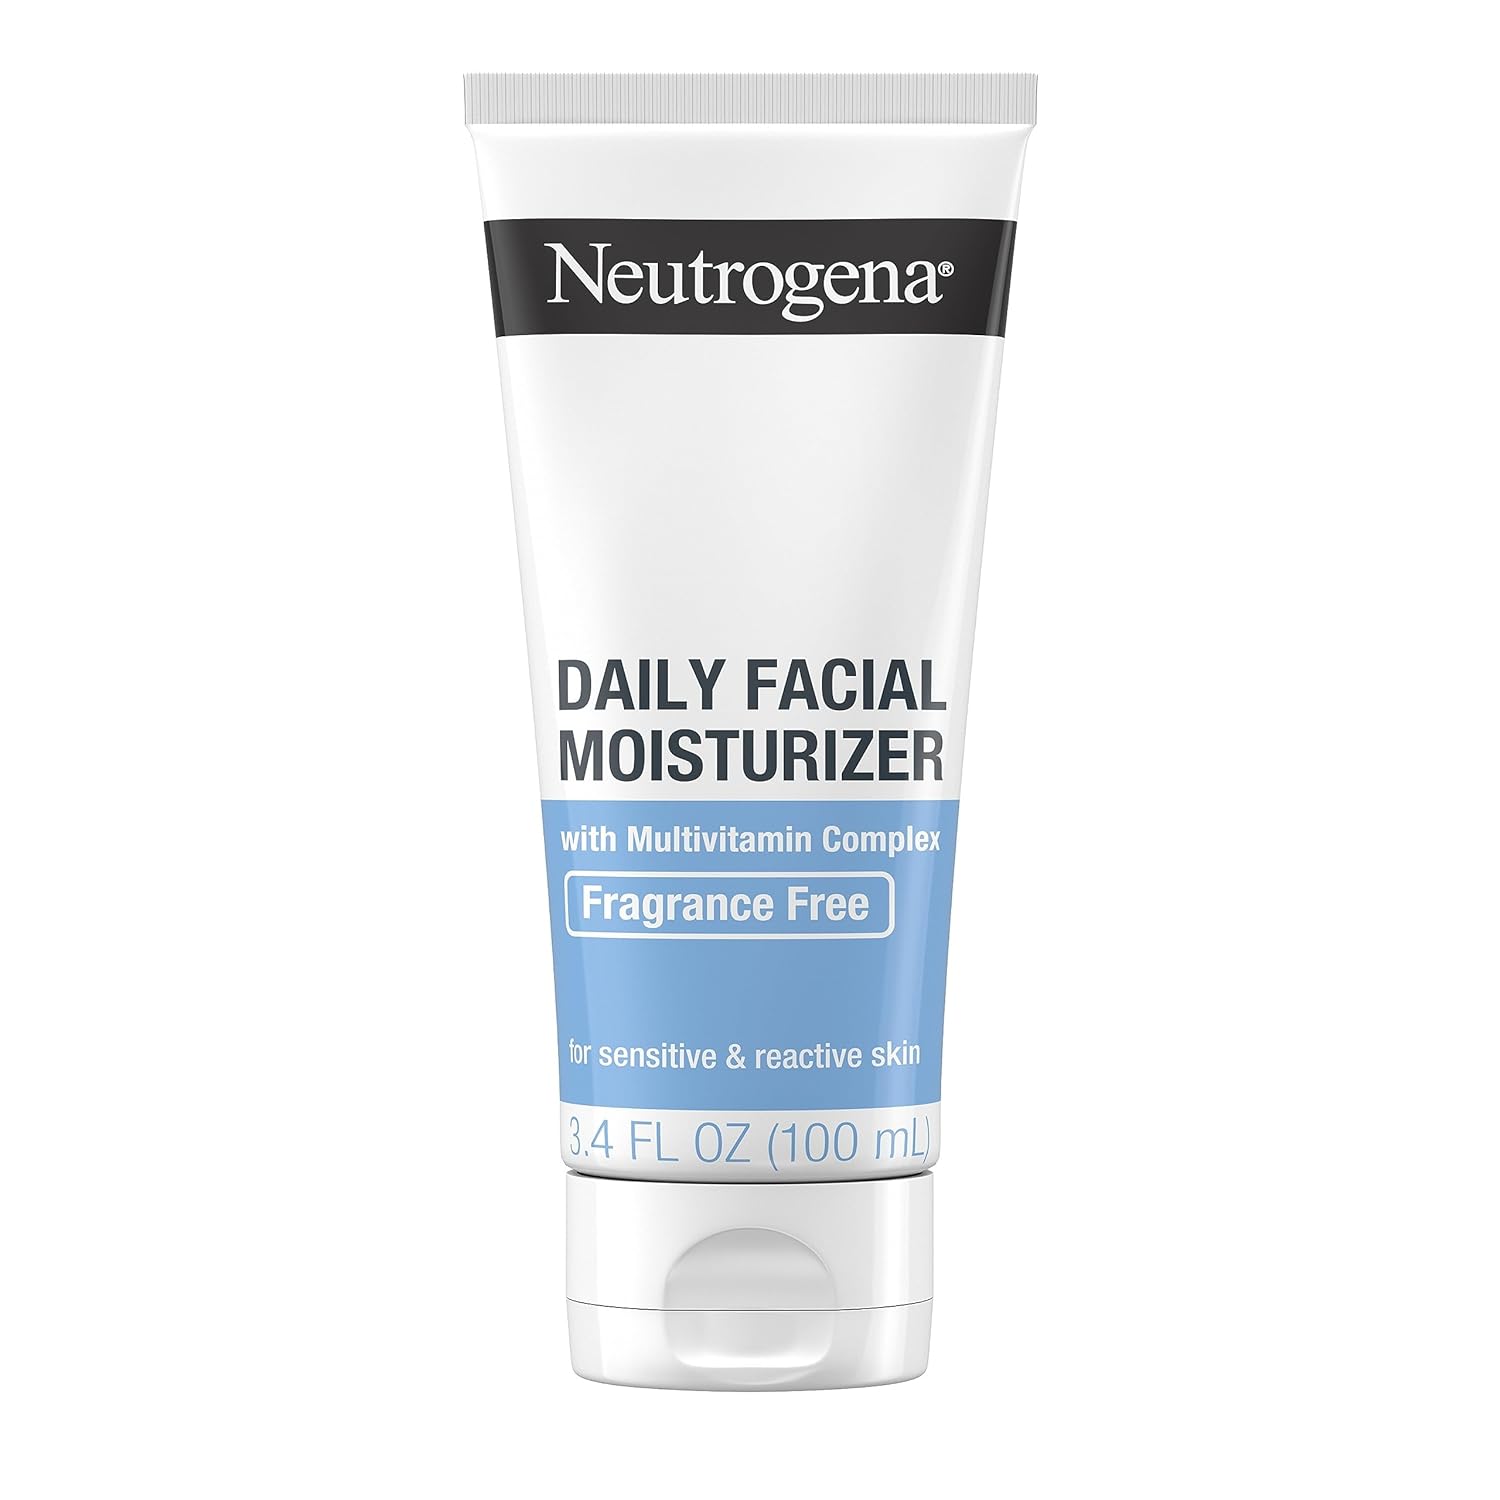 Neutrogena Fragrance Free Daily Facial Moisturizer